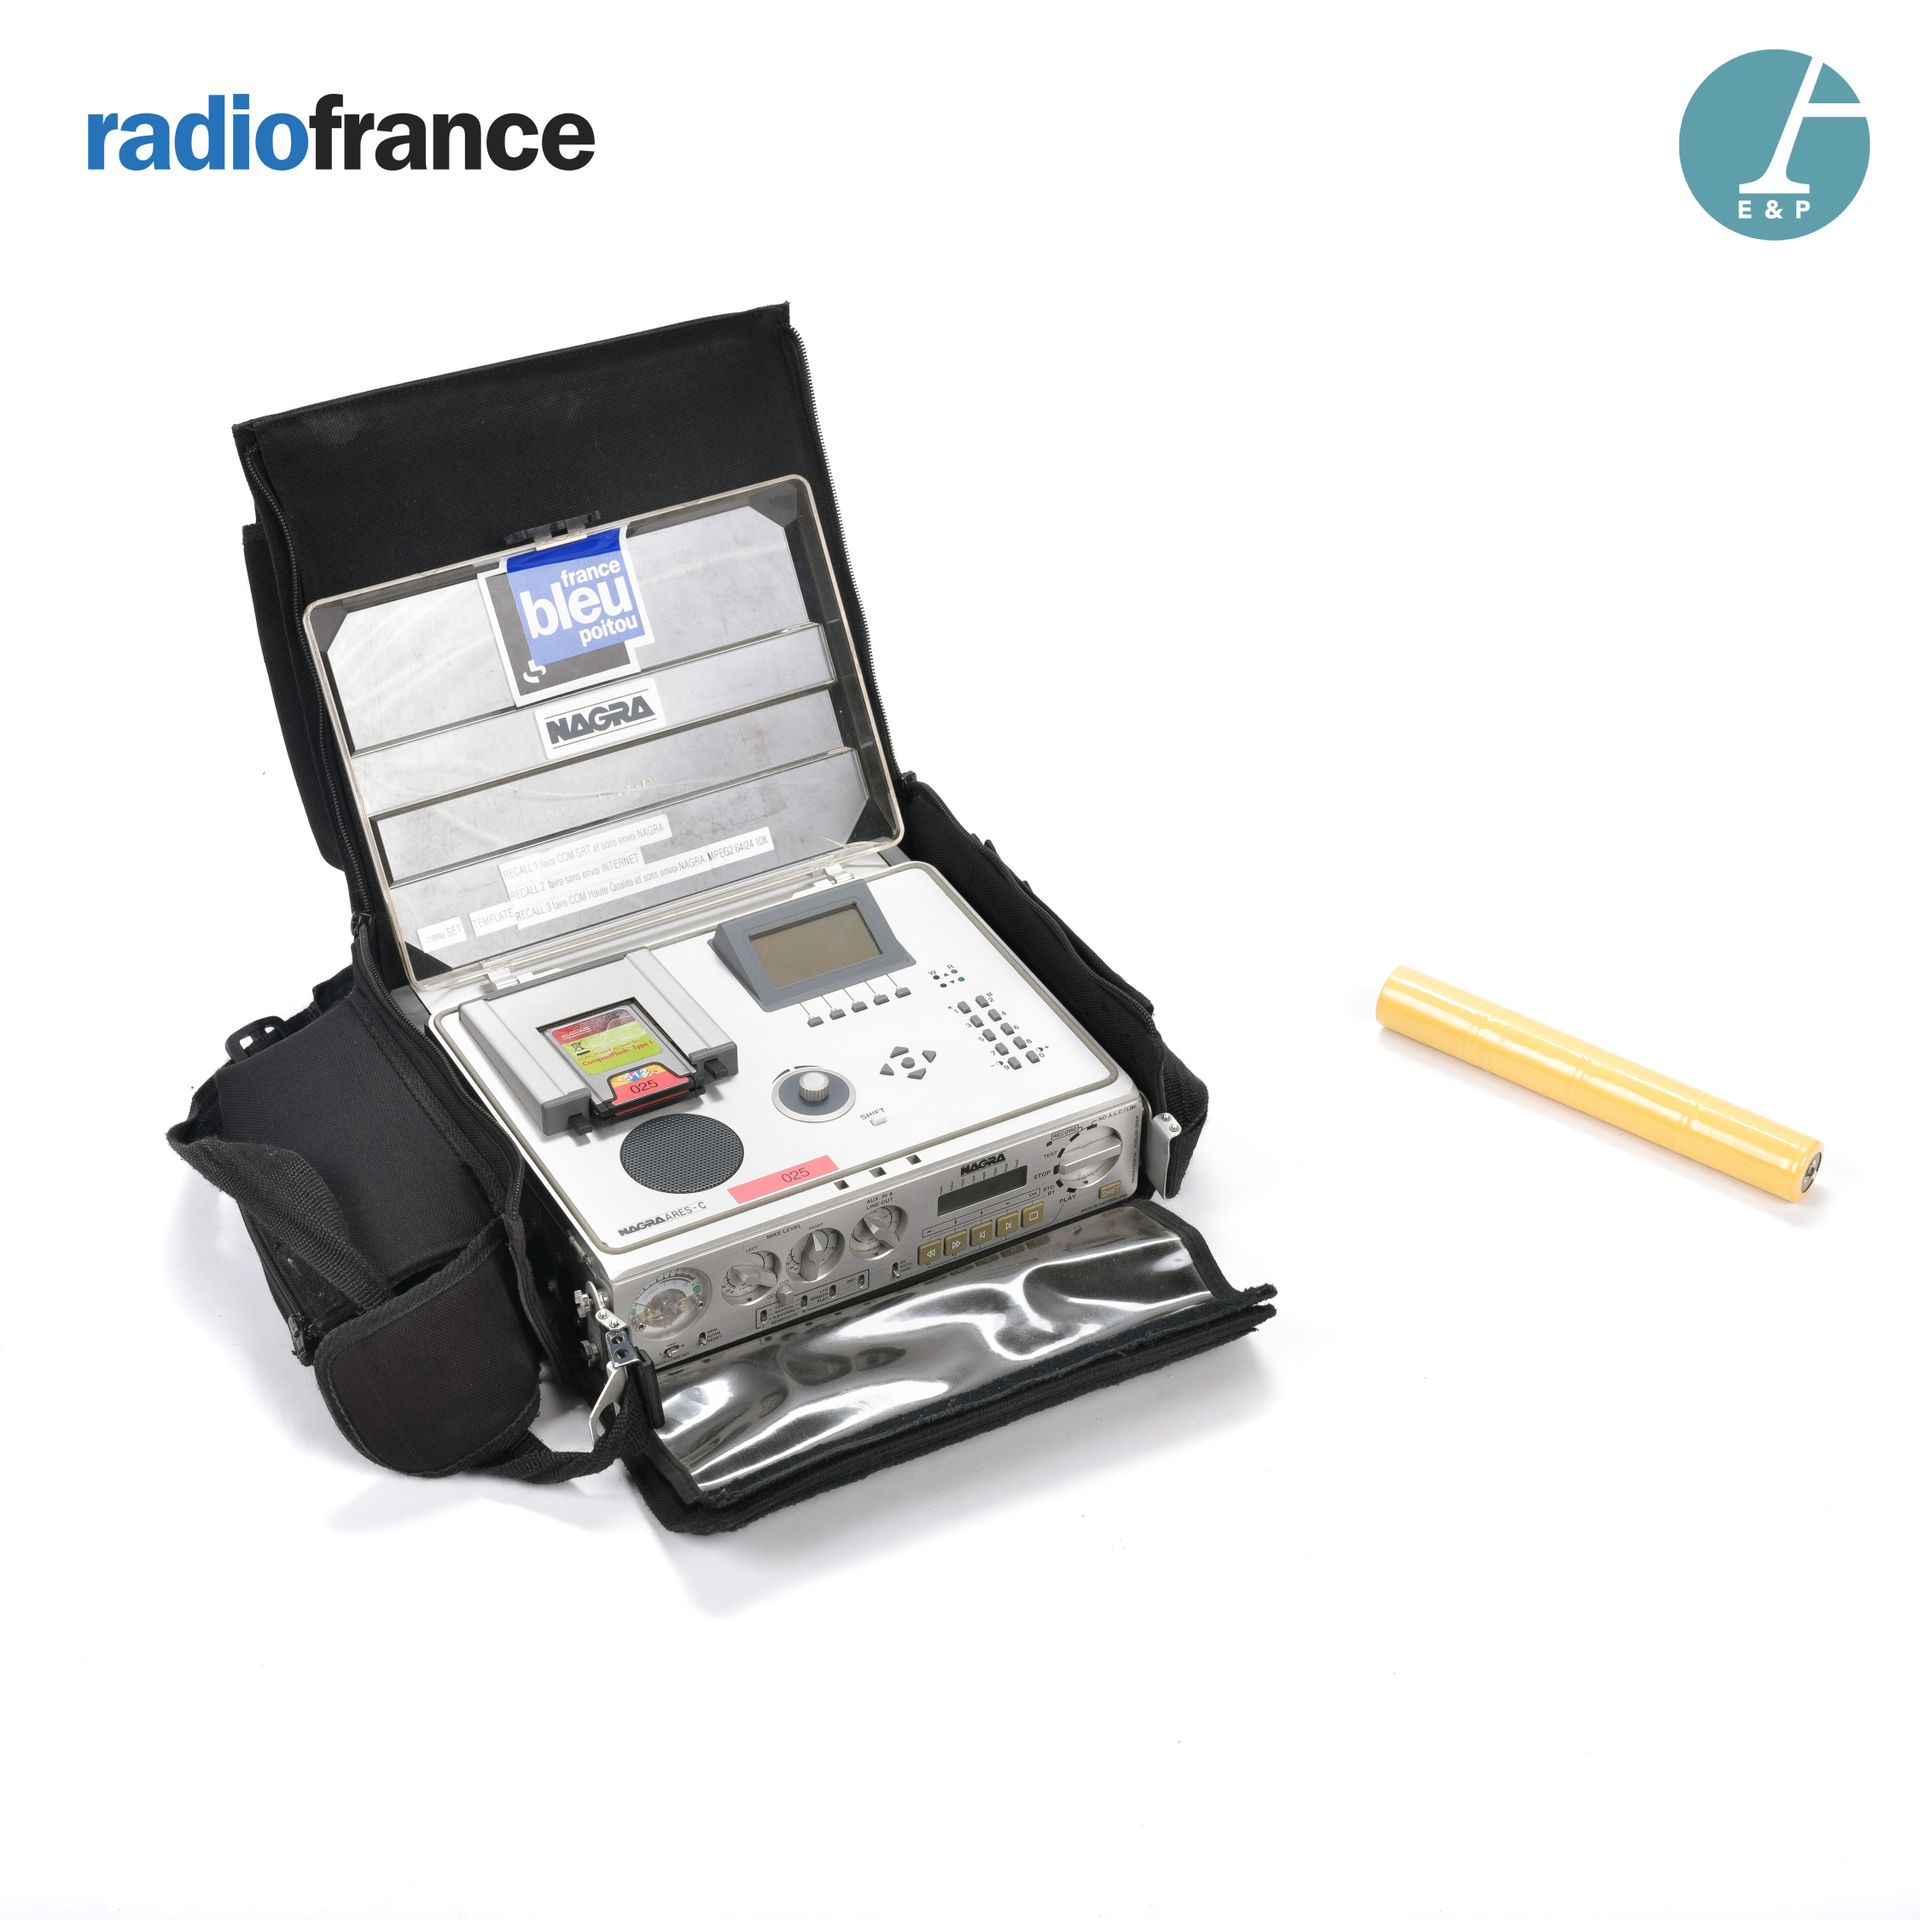 Null NAGRA数字录音机，Ares-C，带有法国广播电台标志的原始黑色布袋。

有一个额外的电池。

来自法国布鲁普瓦图

高：9.5厘米 - 宽：29厘&hellip;